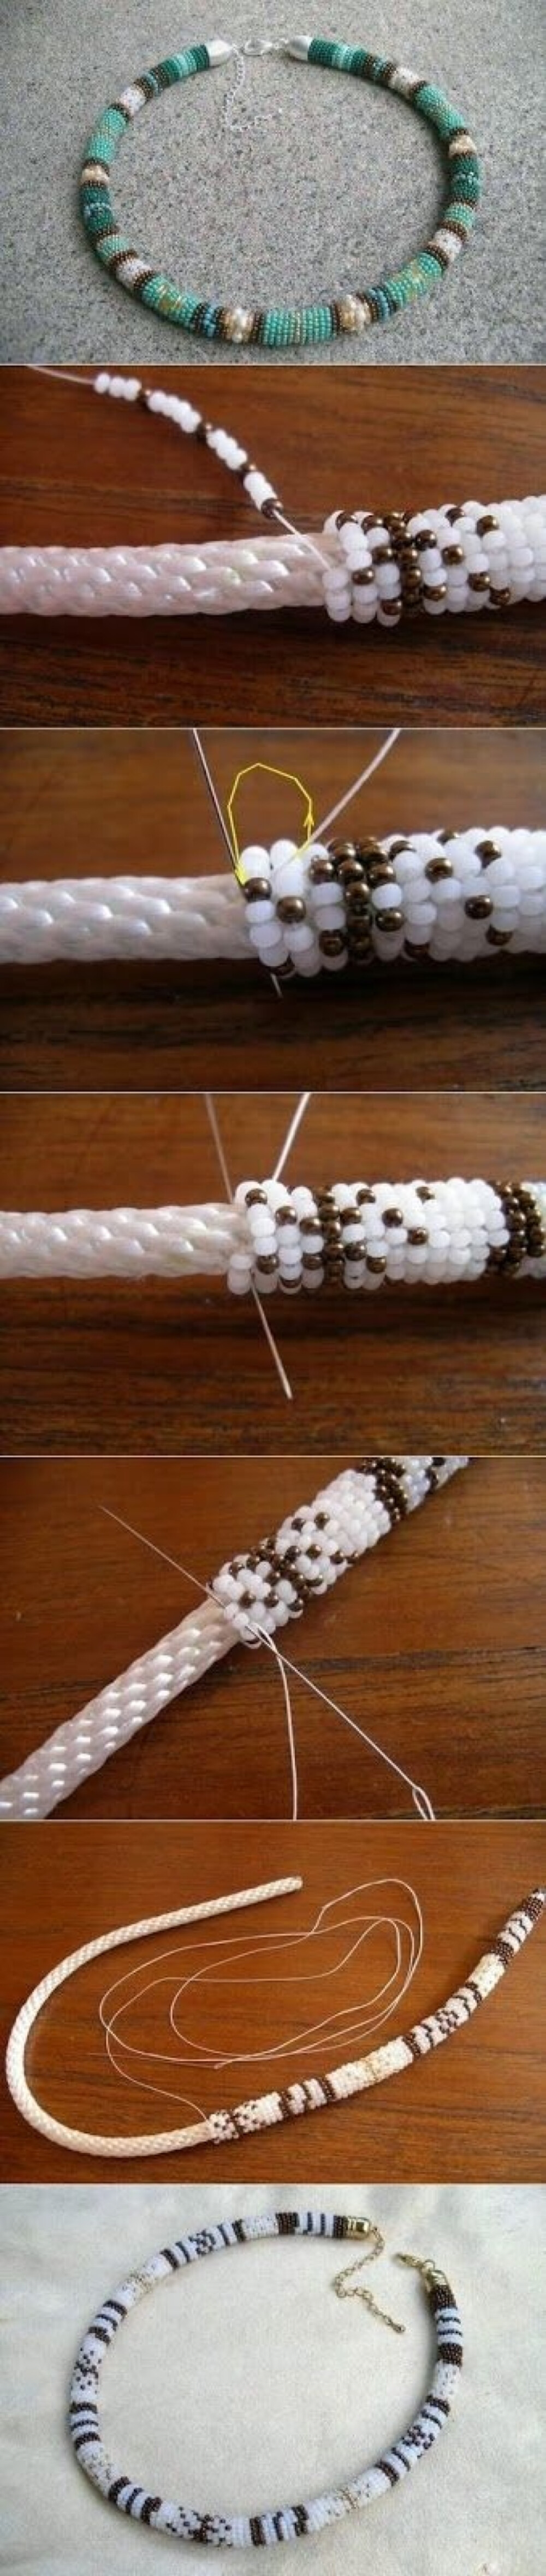 DIY串珠绳项链